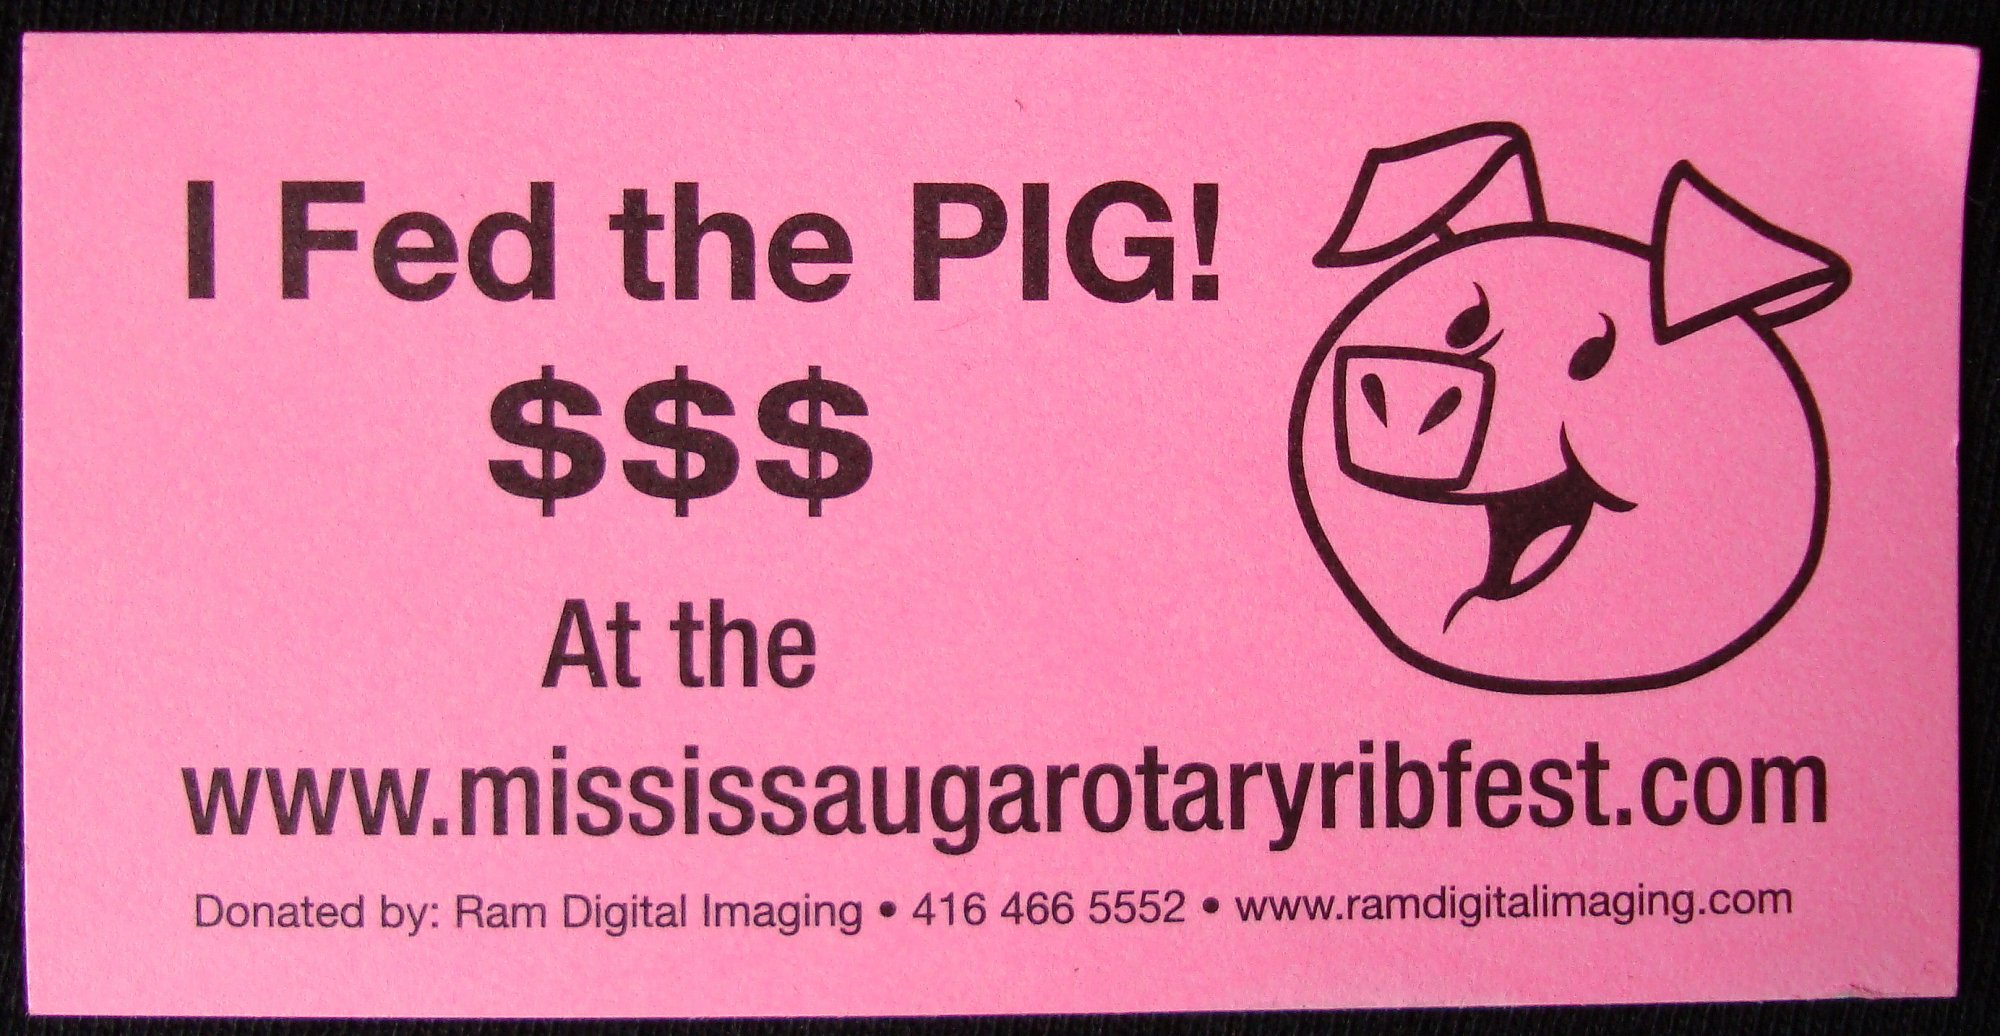 Mississauga Rotary Ribfest I Fed the Pig photo by I Lee 19Jul10